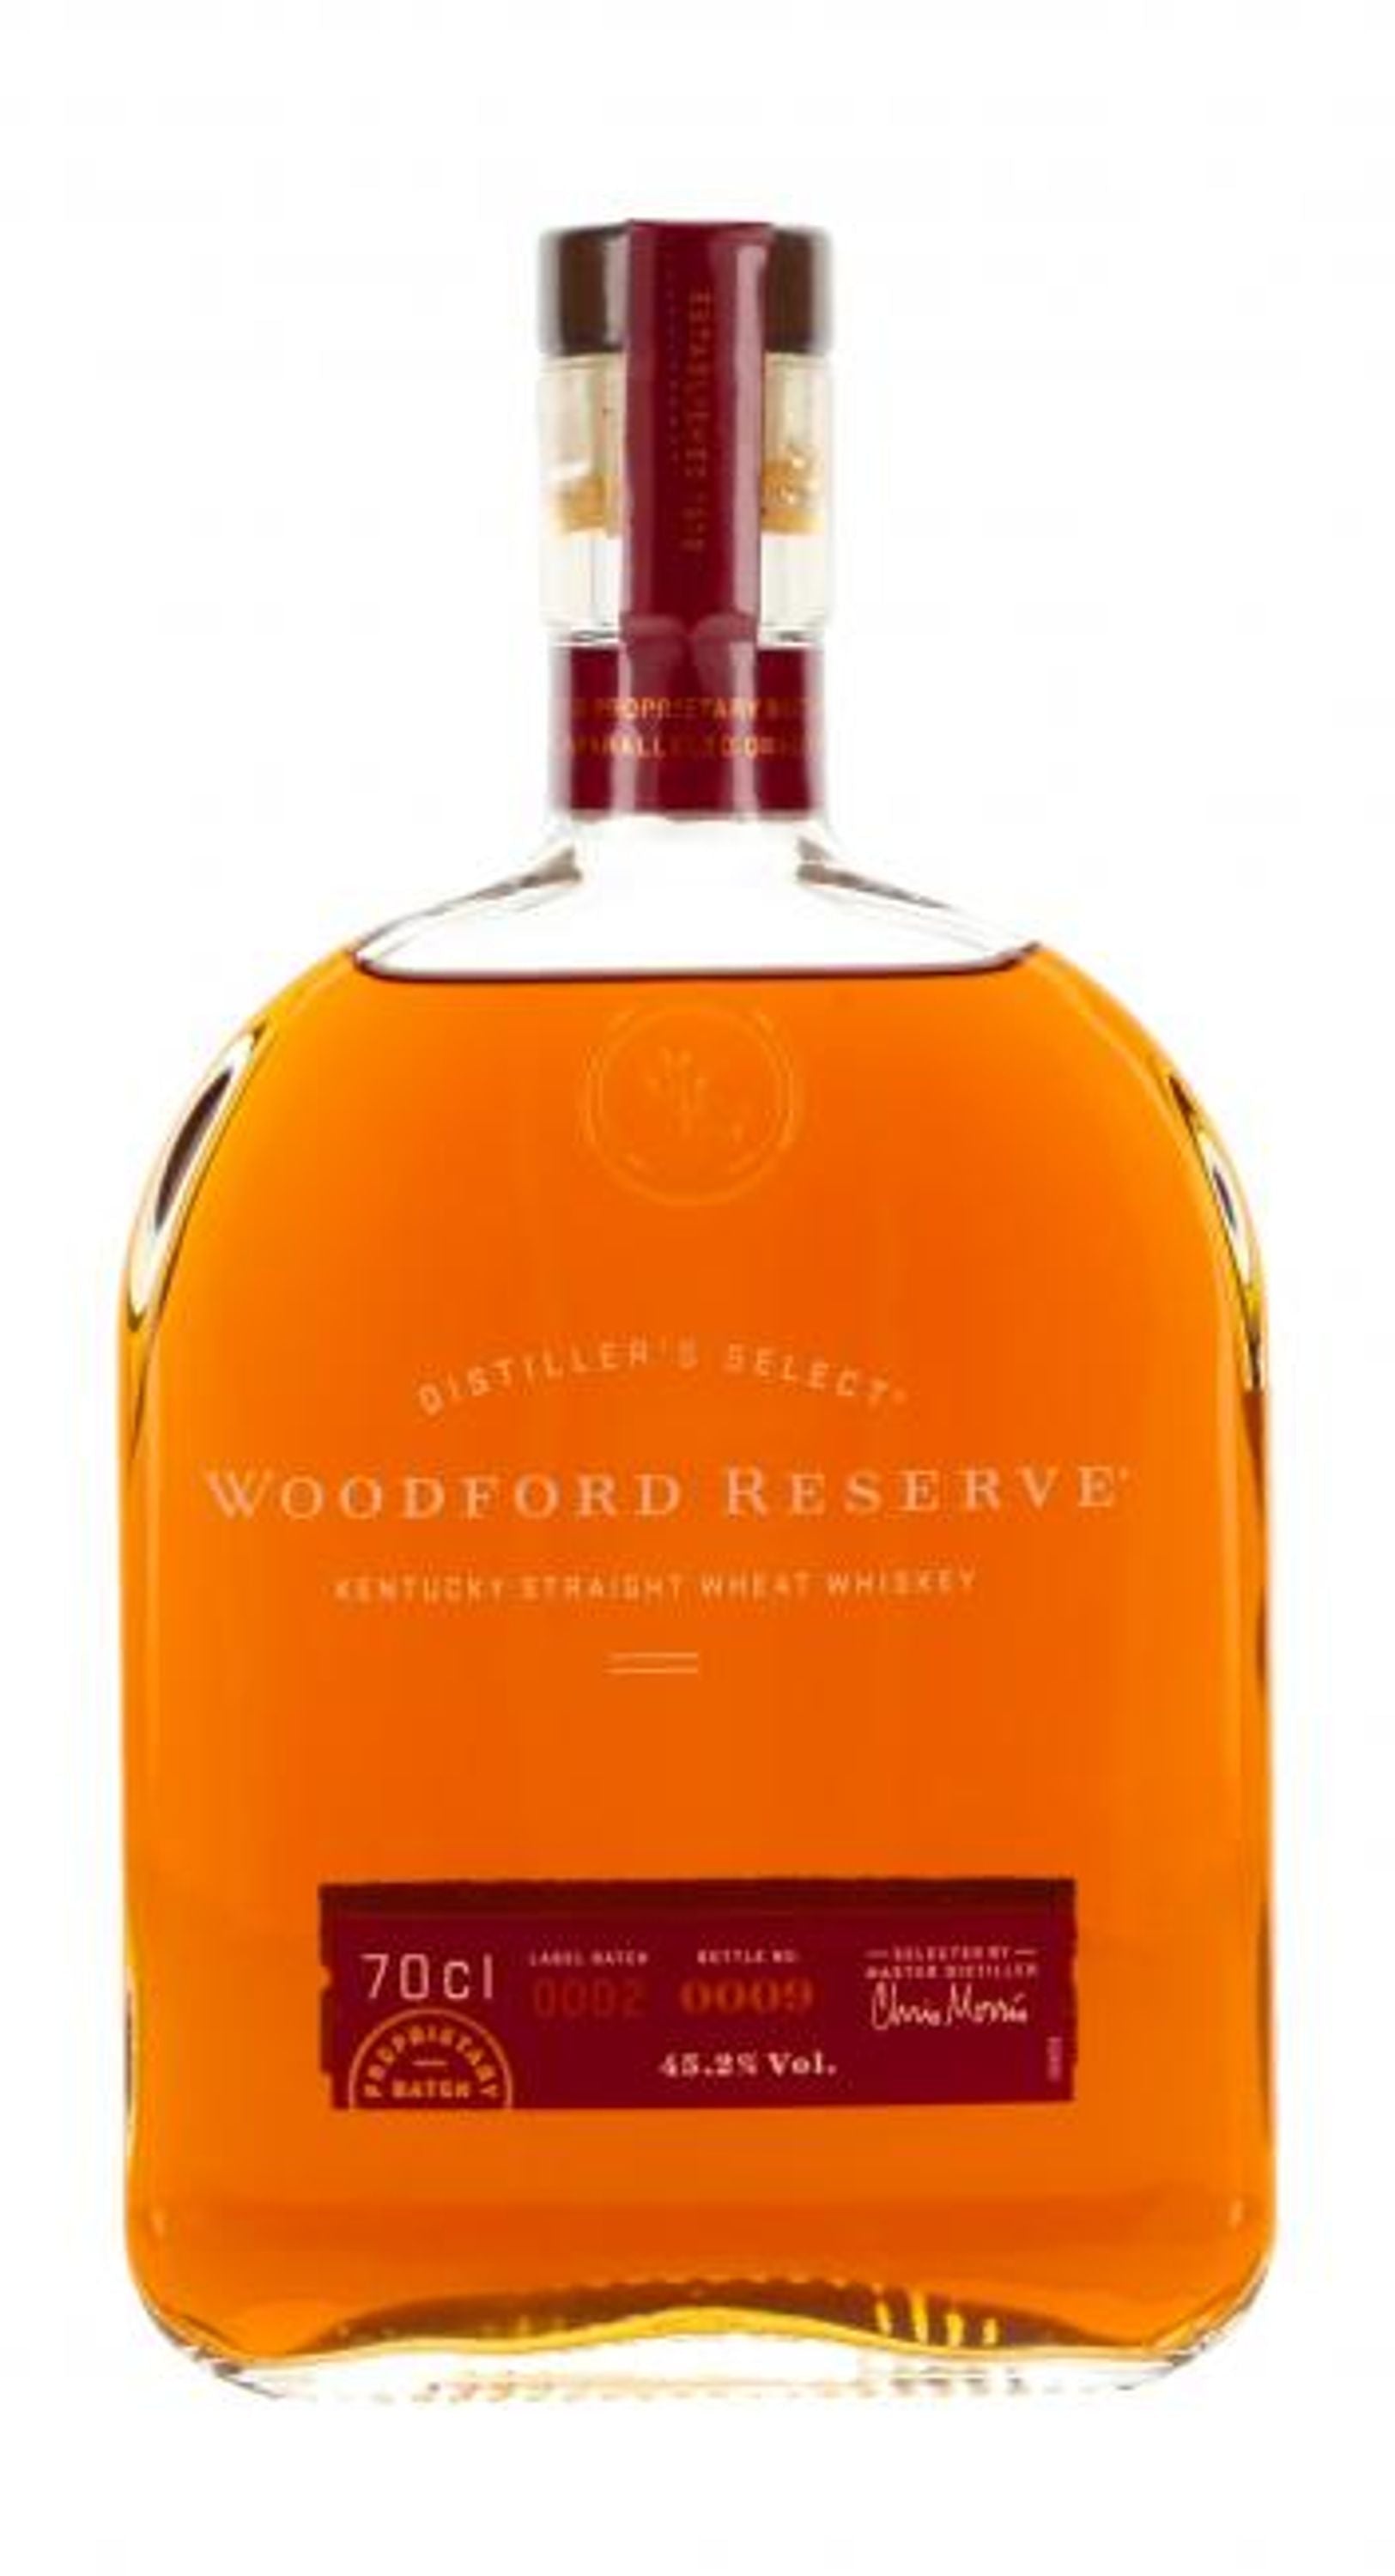 Woodford Reserve Kentucky Straight Wheat Whisky 0,7l, alk. 45,2 tilavuusprosenttia.